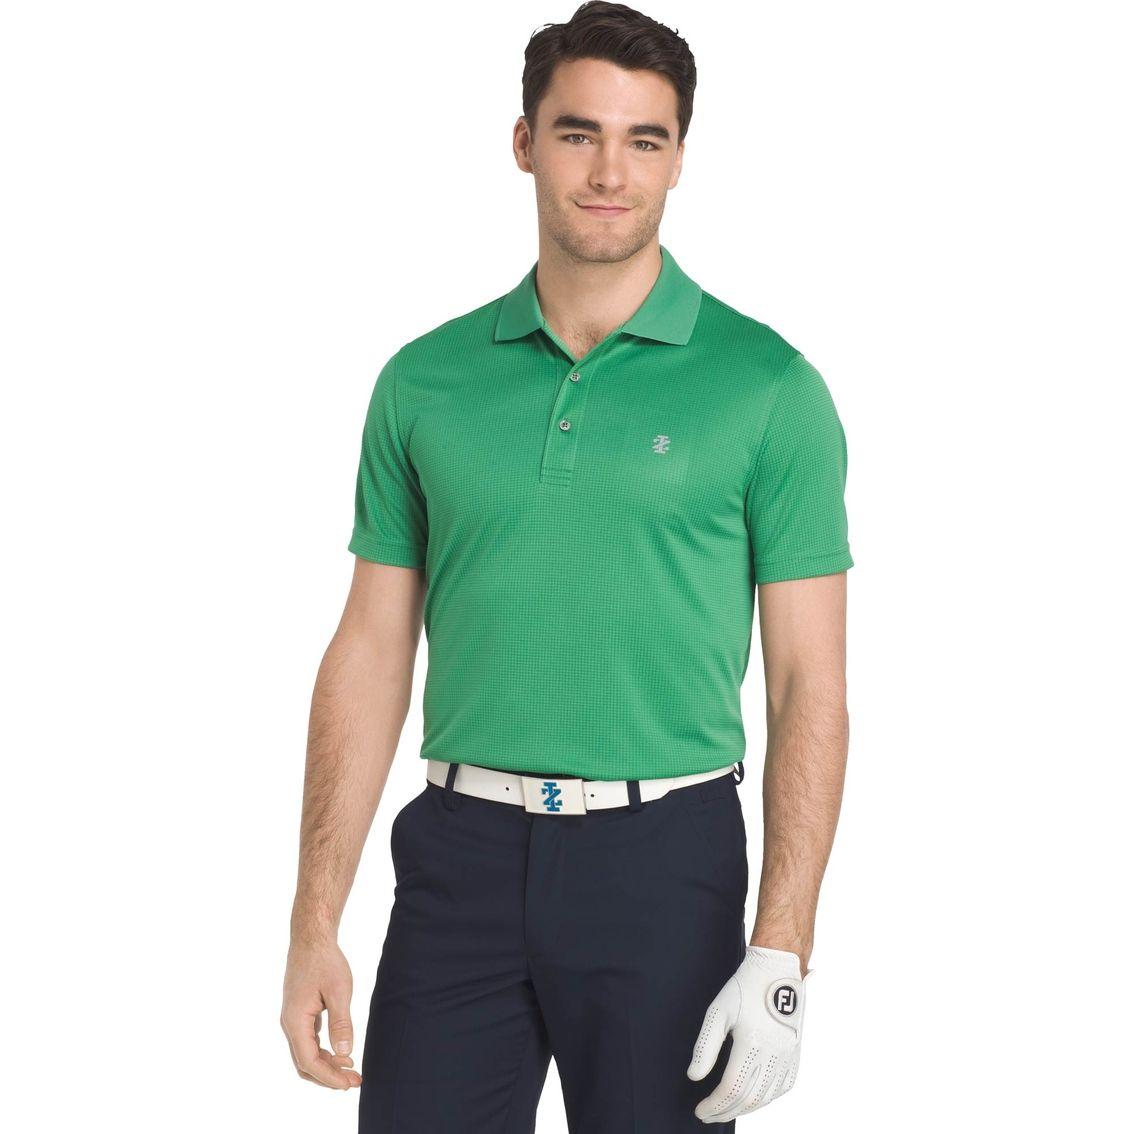 Izod Apparel Logo - Izod Champion Grid Golf Polo | Polos | Apparel | Shop The Exchange